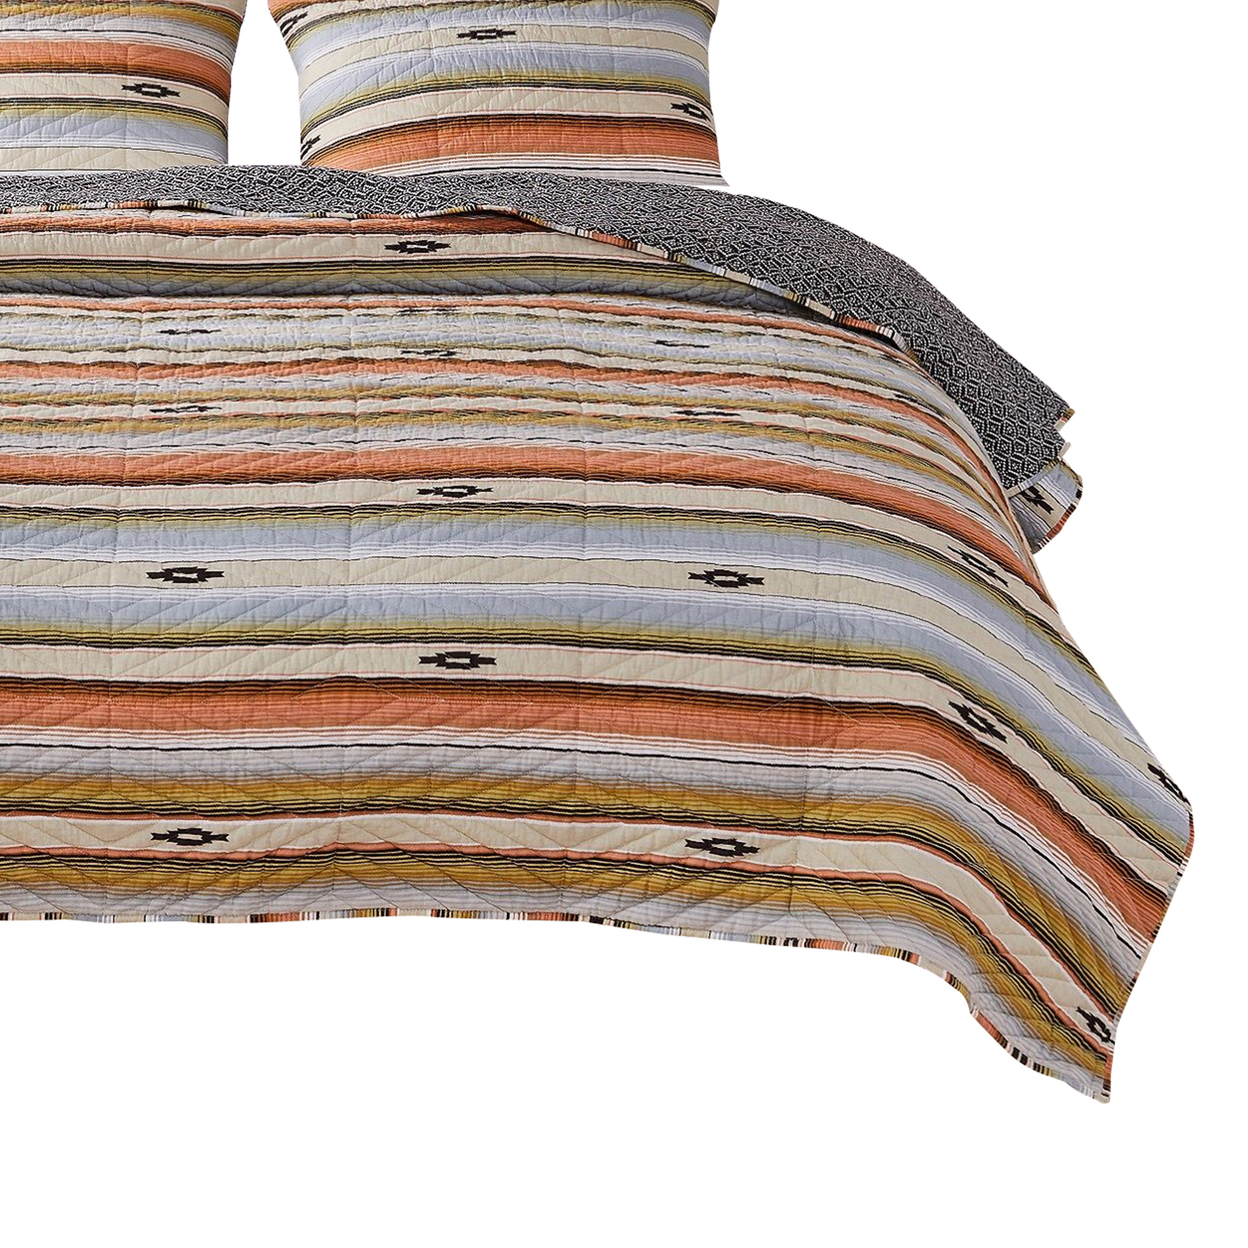 3 Piece Microfiber King Size Quilt Set With Chevron Print, Multicolor- Saltoro Sherpi